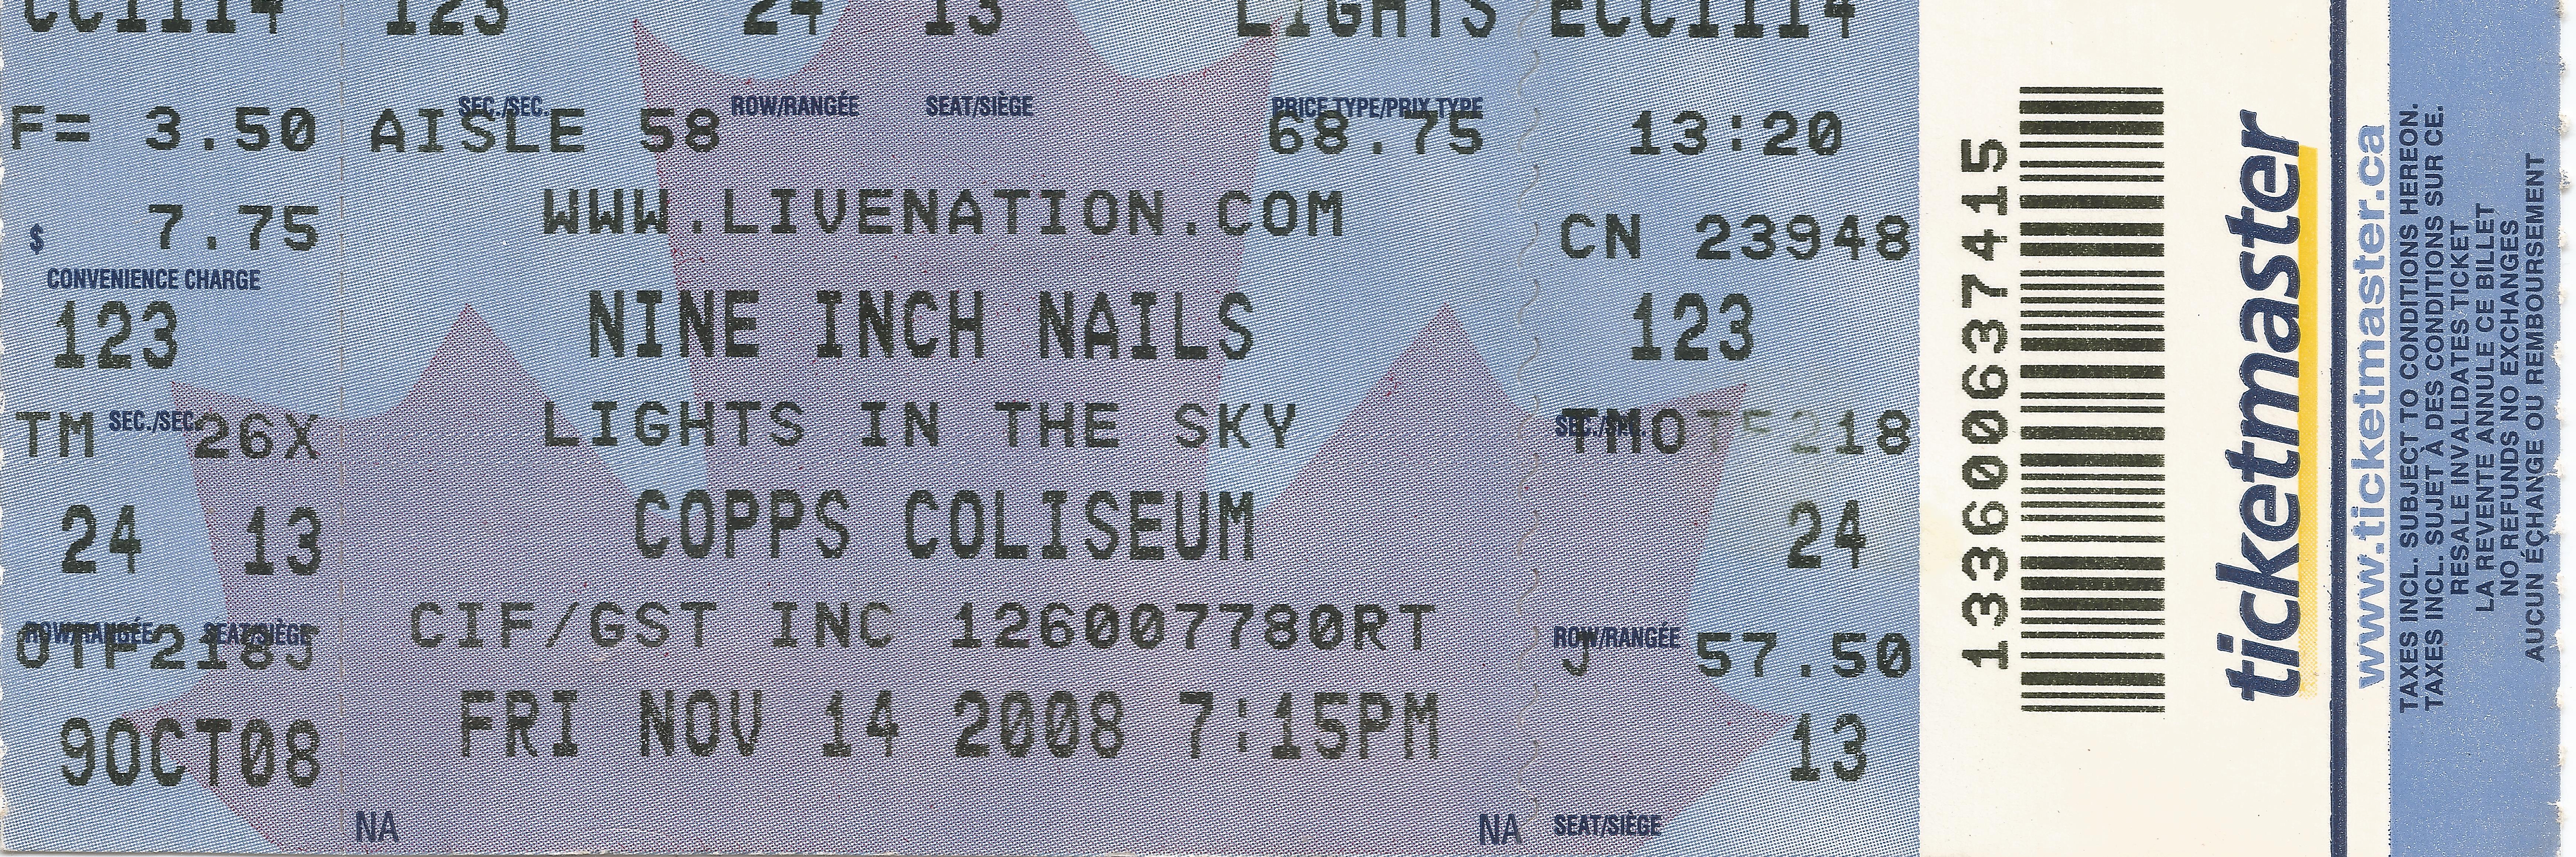 2008/11/14 Ticket